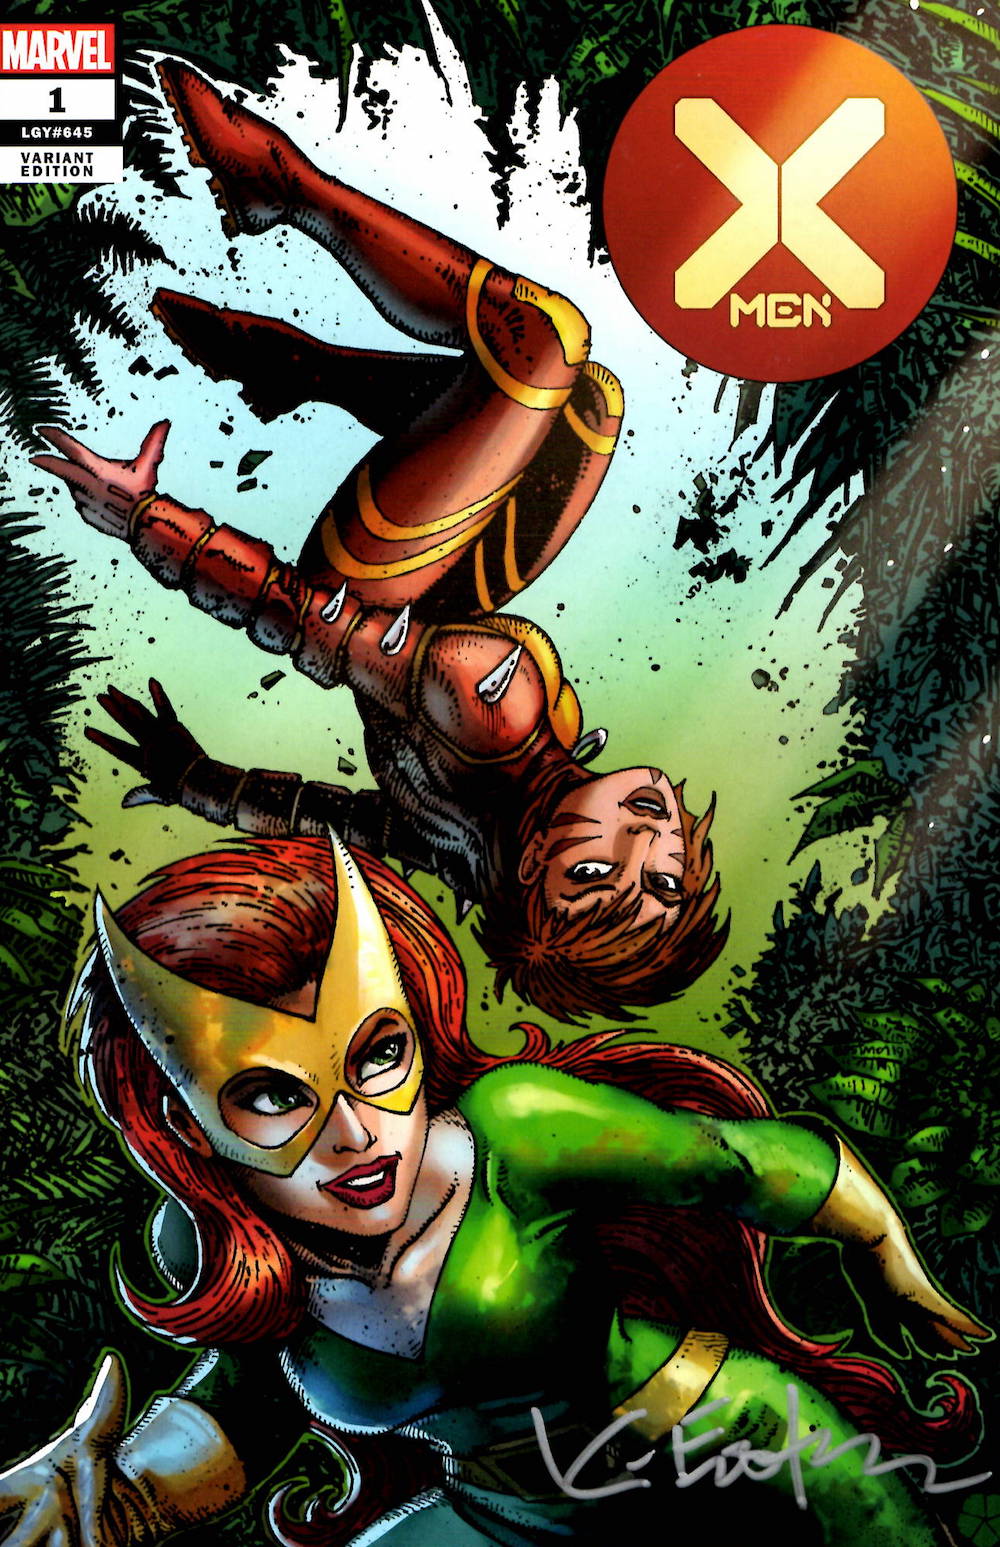 X-MEN Issue 1 – COVER ROUGH D